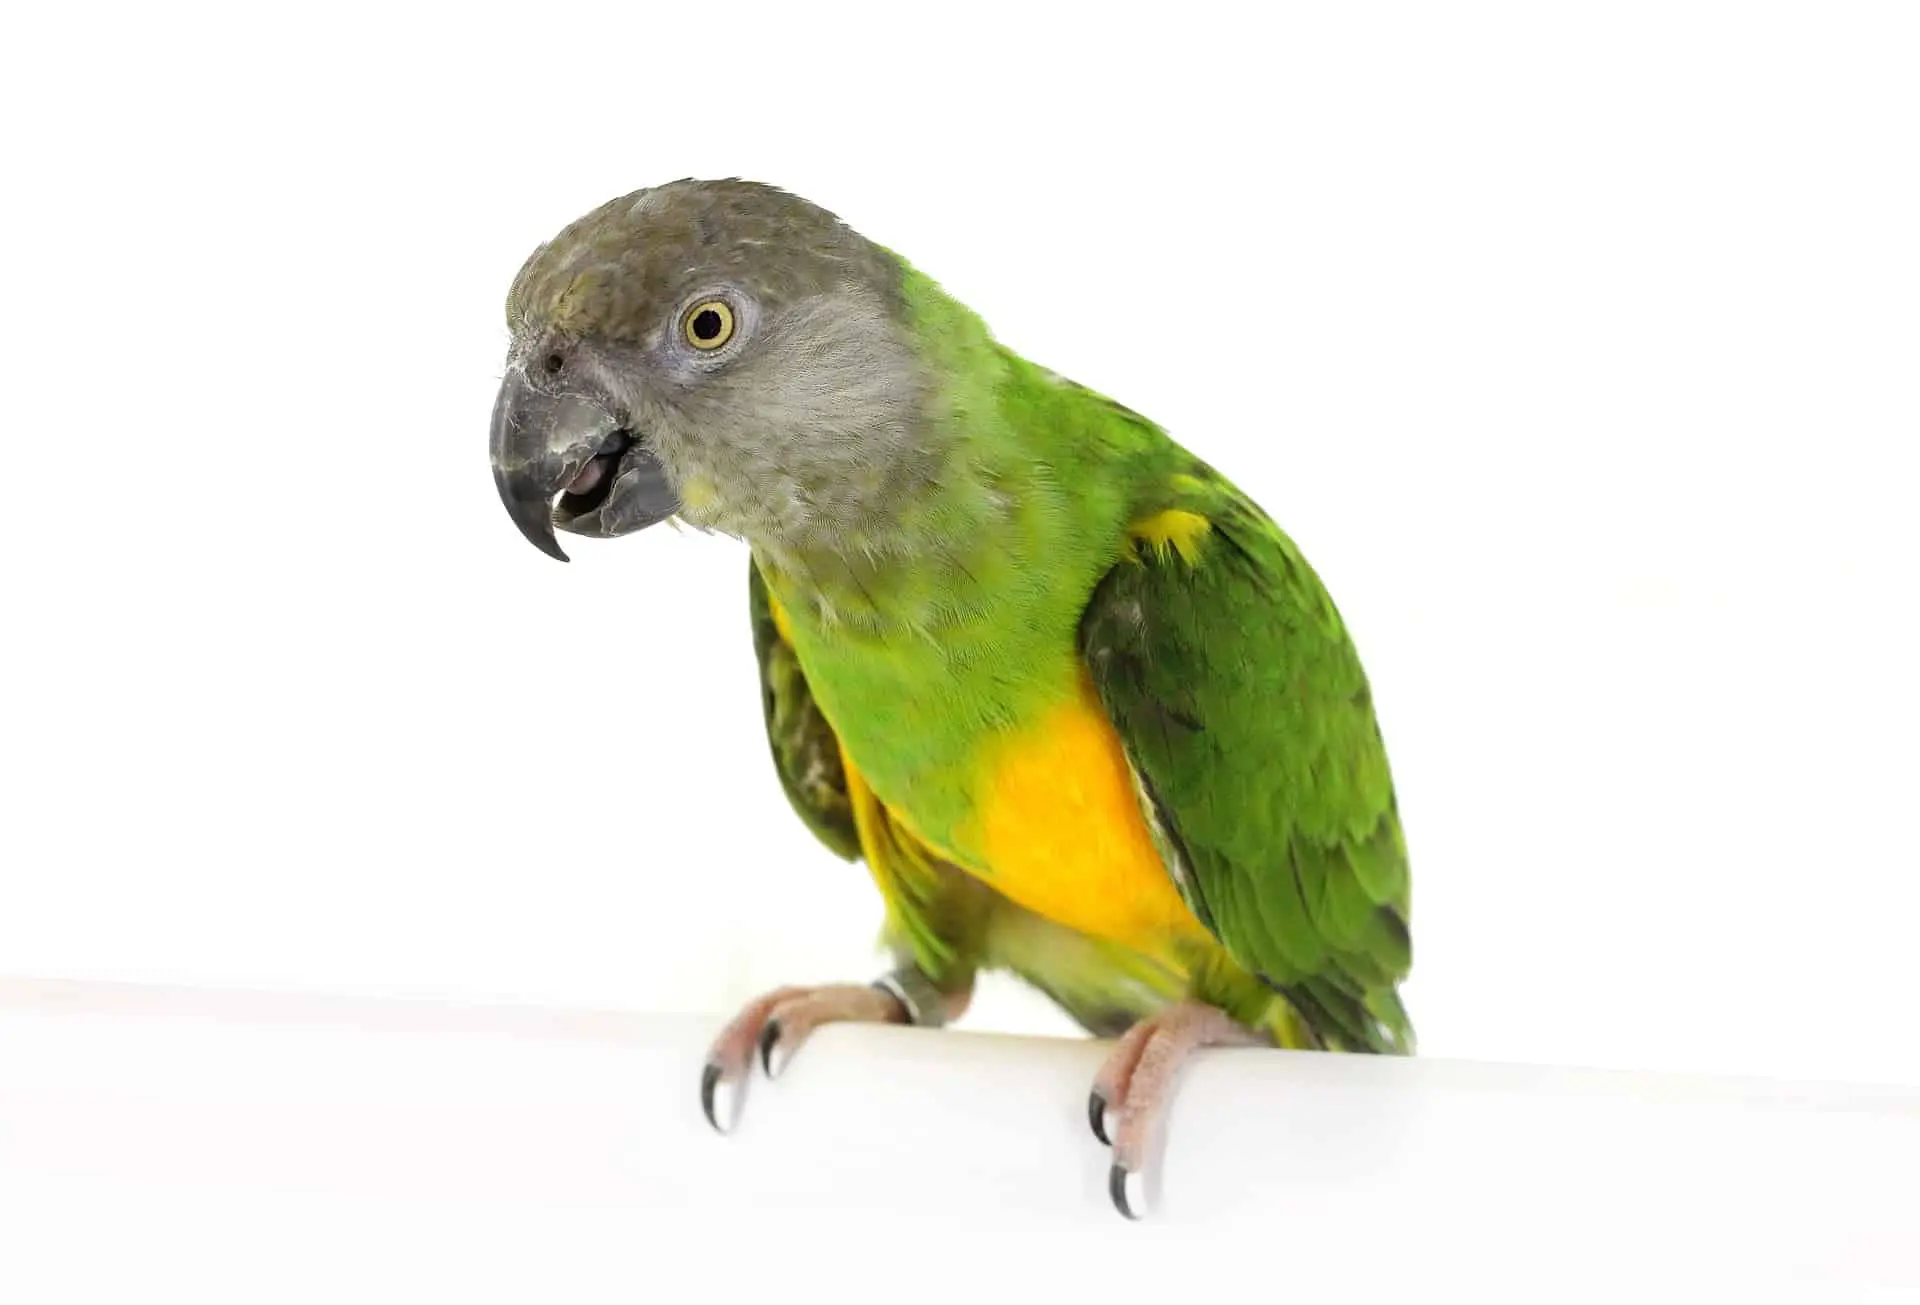 Pied farmer or senegal parrot